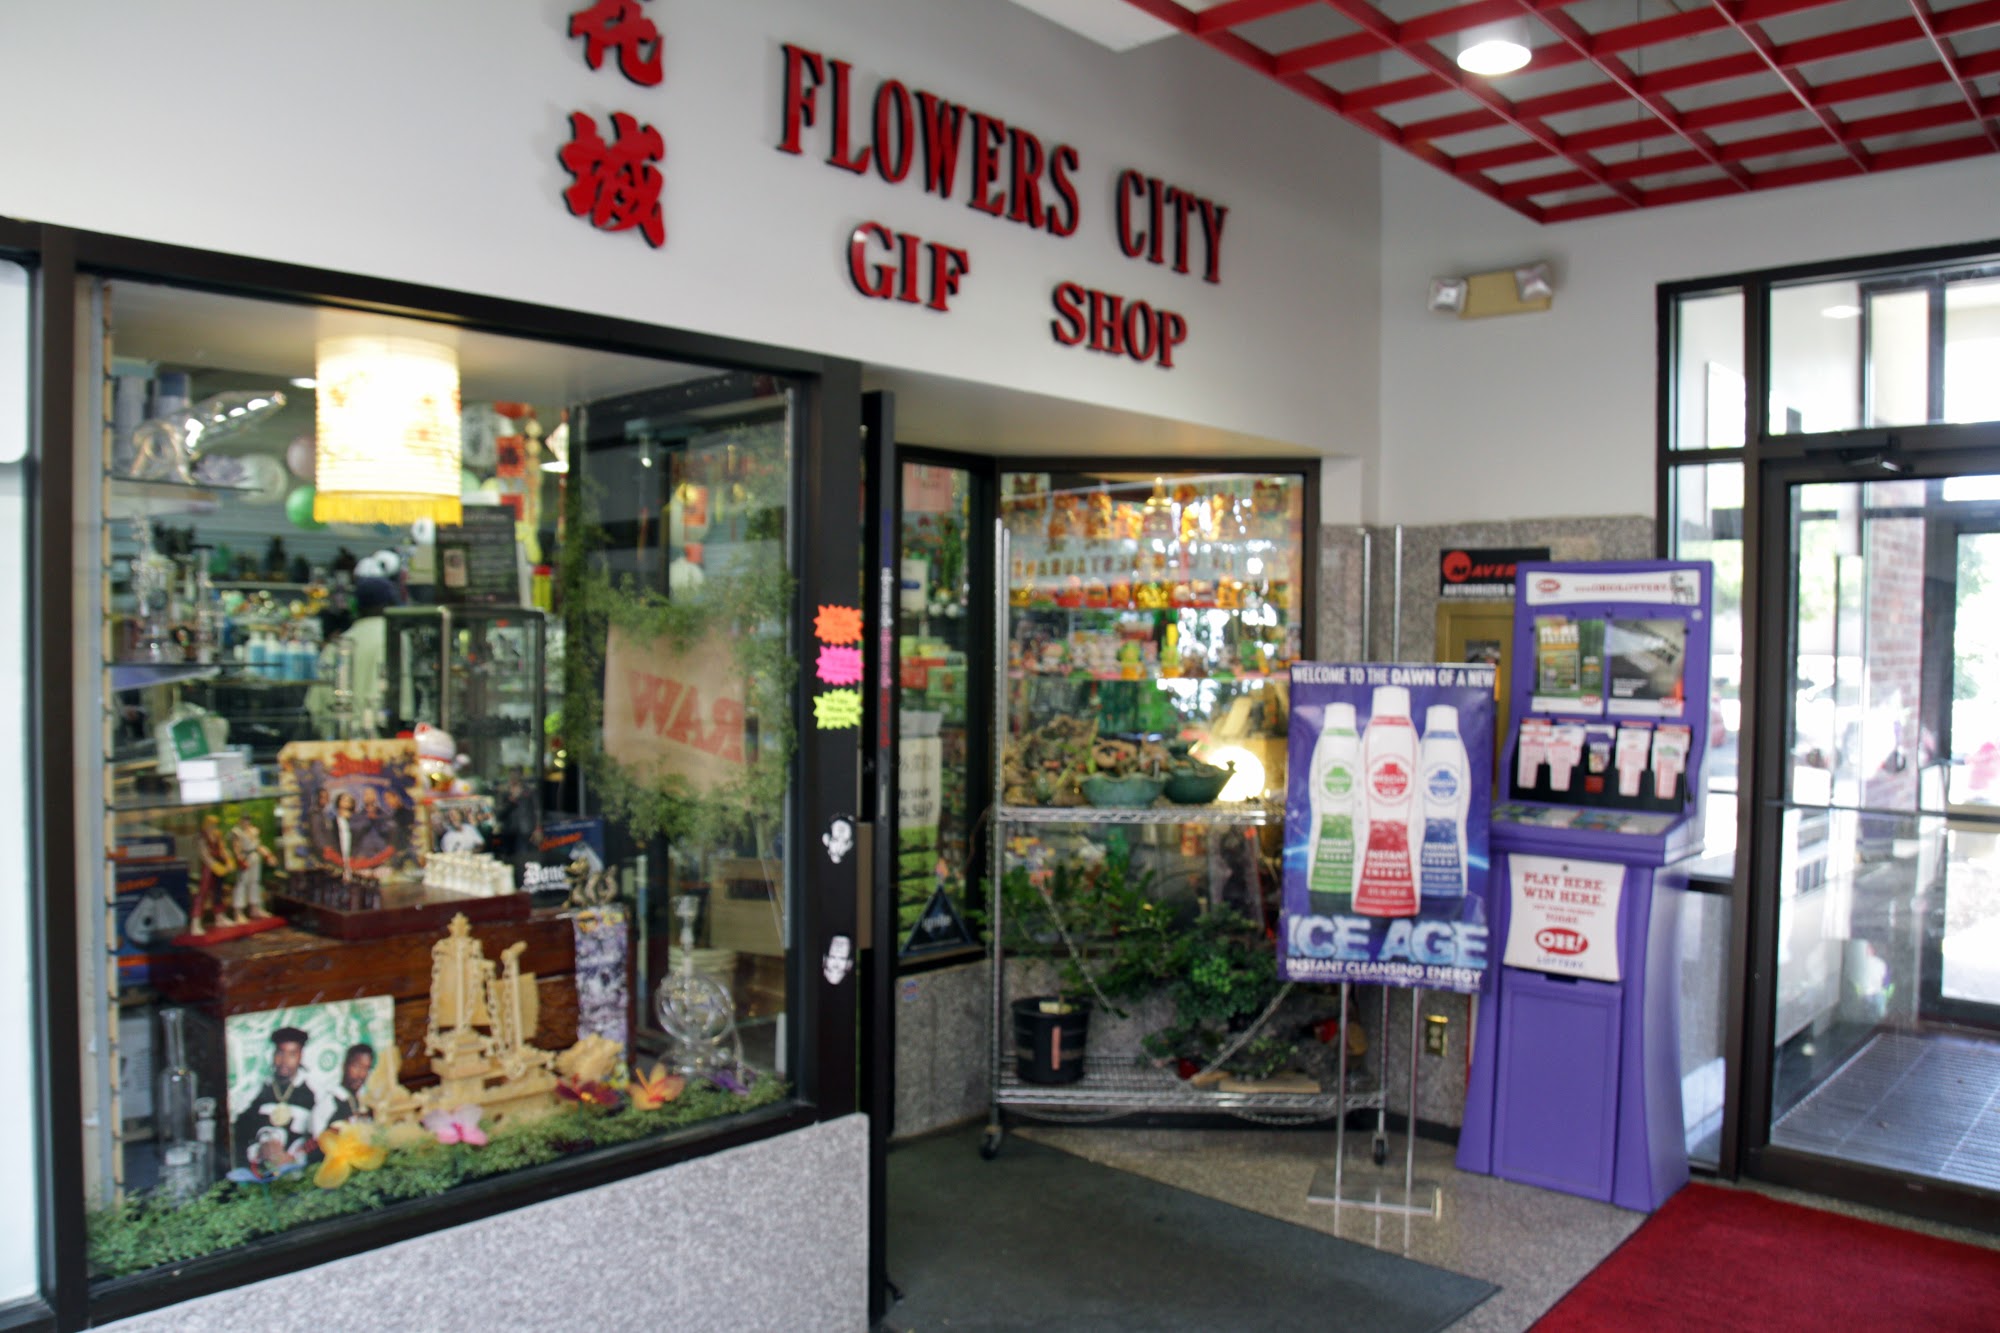 Flower City Gift Shop